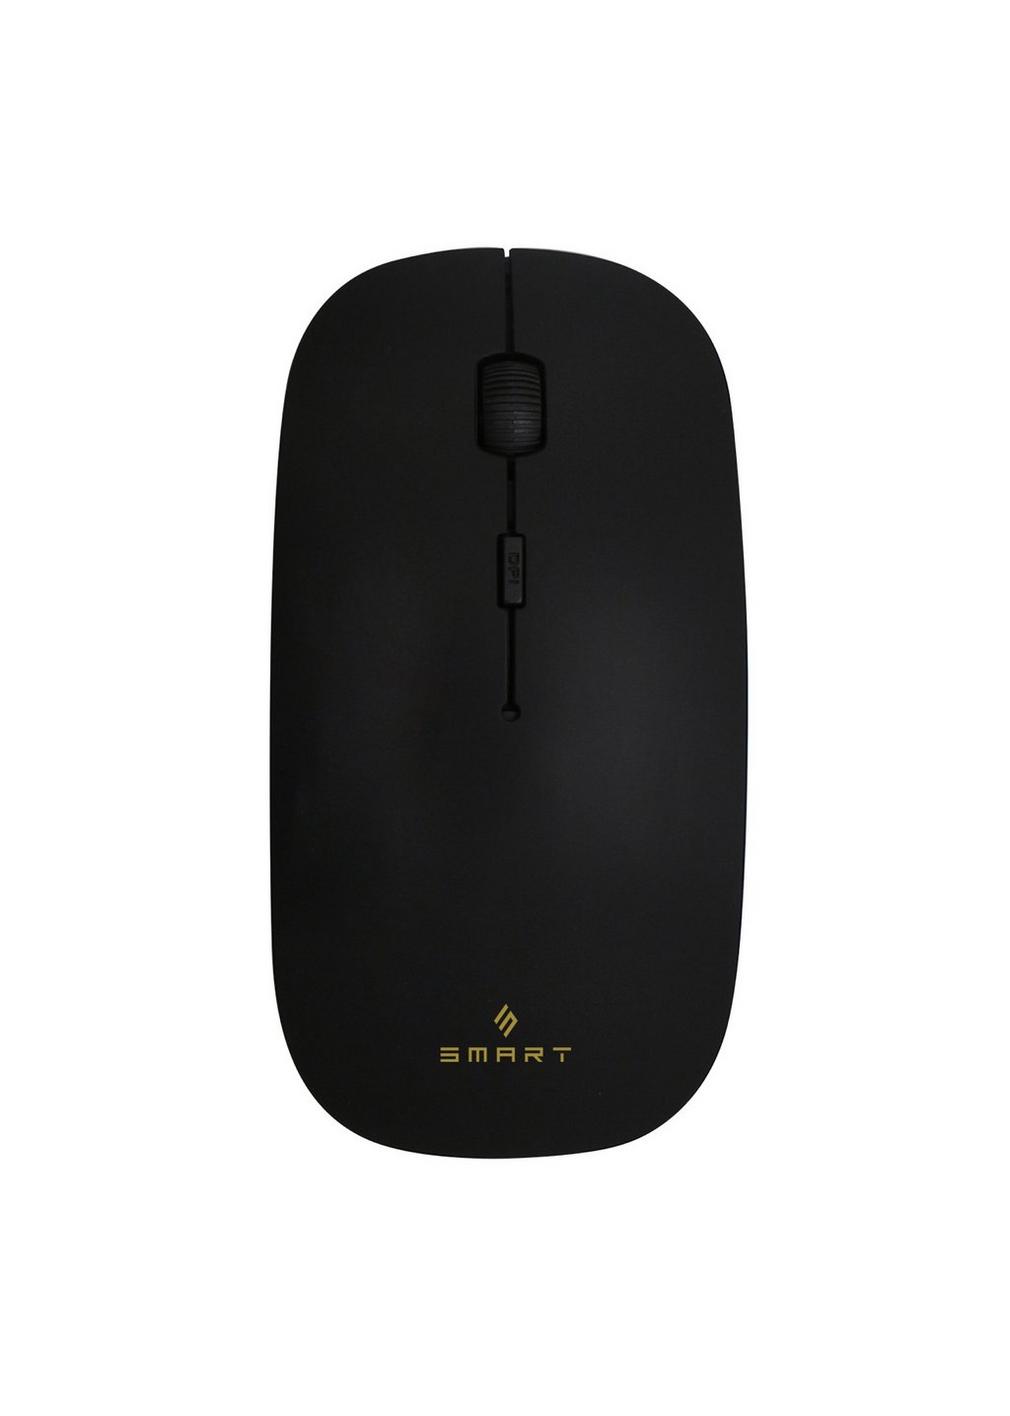 Smart Premium Wireless Mouse | Color Black | Computer Accessories in Bahrain | Halabh